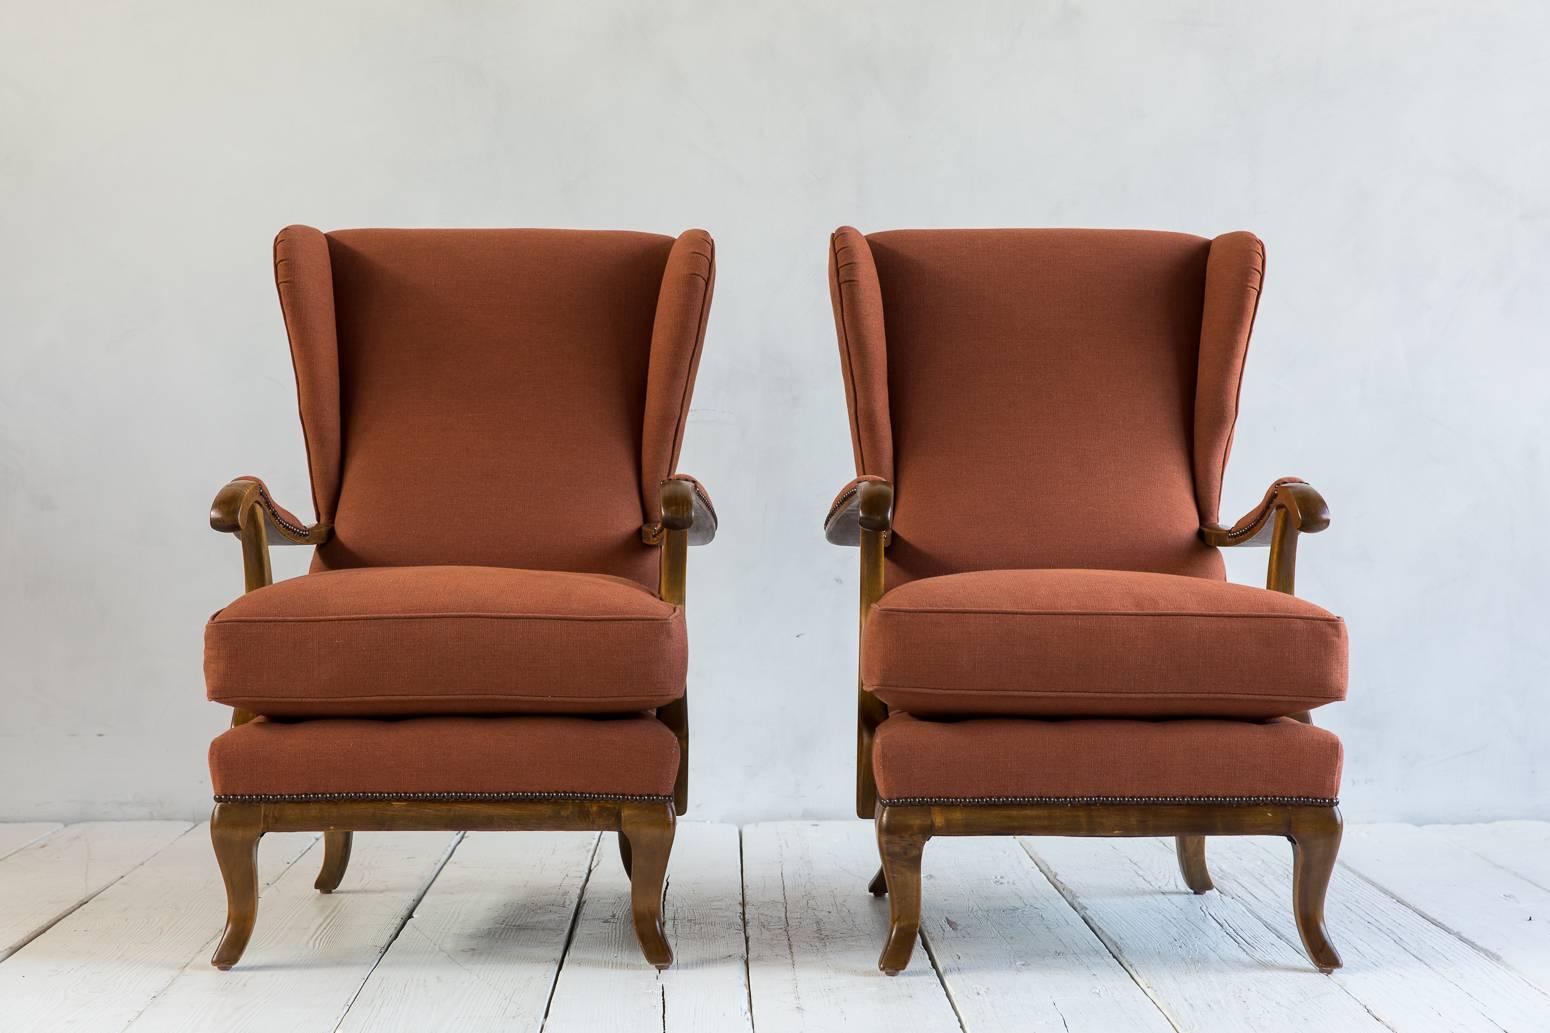 Vintage Italian wing chair upholstered in rust riptsop Howe fabric.